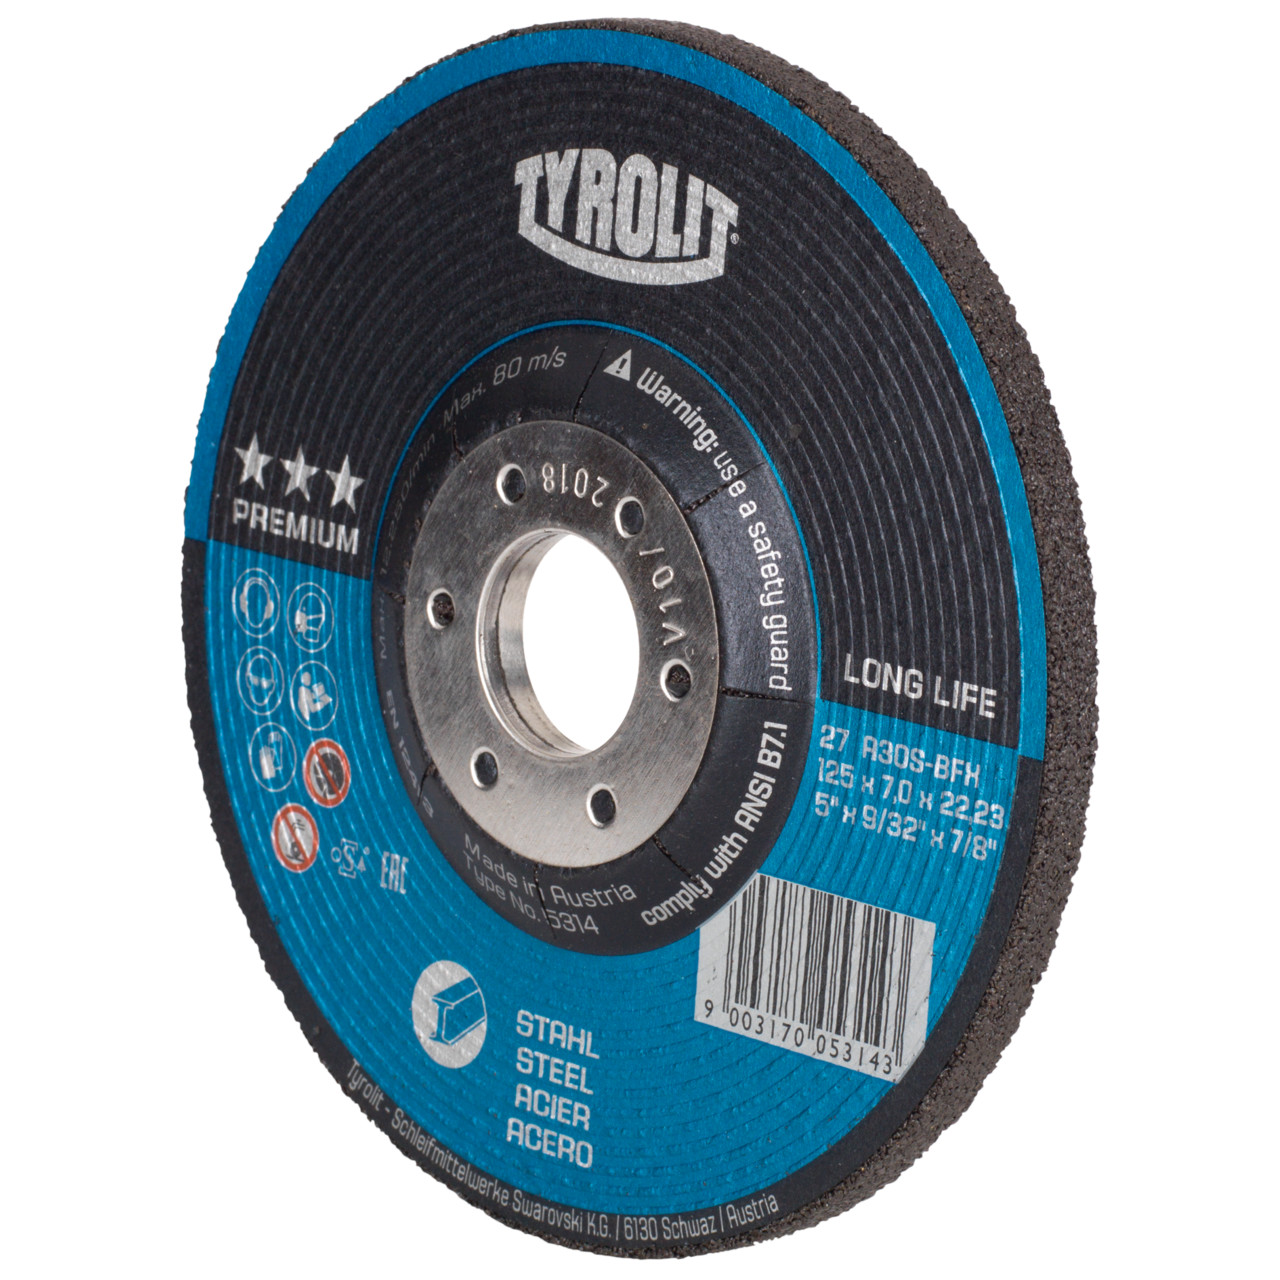 Tyrolit Rough grinding disc DxUxH 230x7x22.23 LONGLIFE Z-MAX for steel, shape: 27 - offset version, Art. 34353689